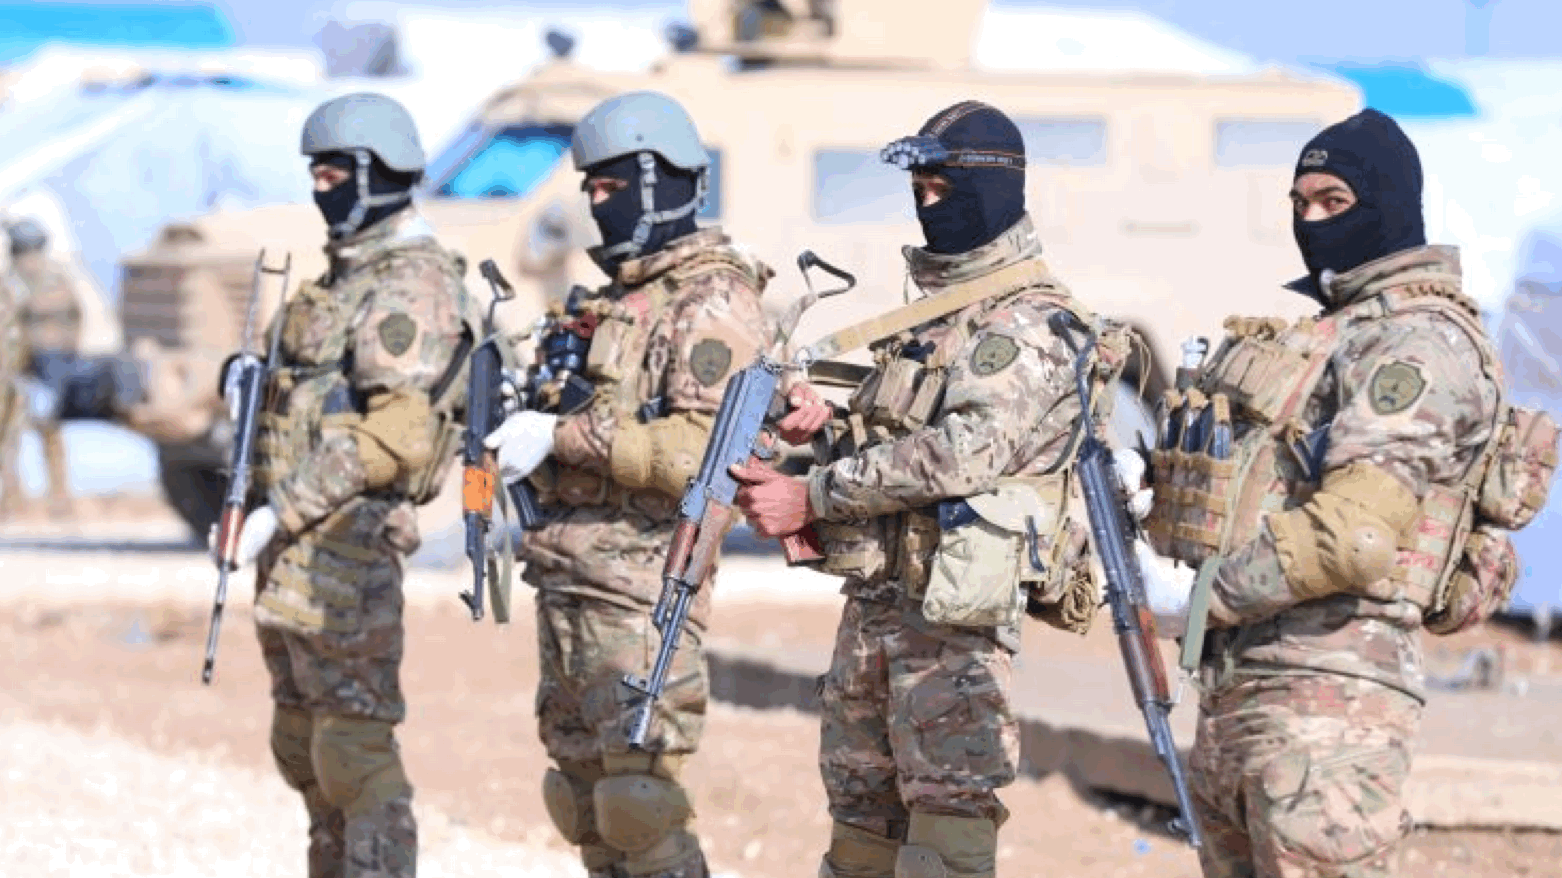 SDF forces in al-Hol camp (Photo: SDF Press)